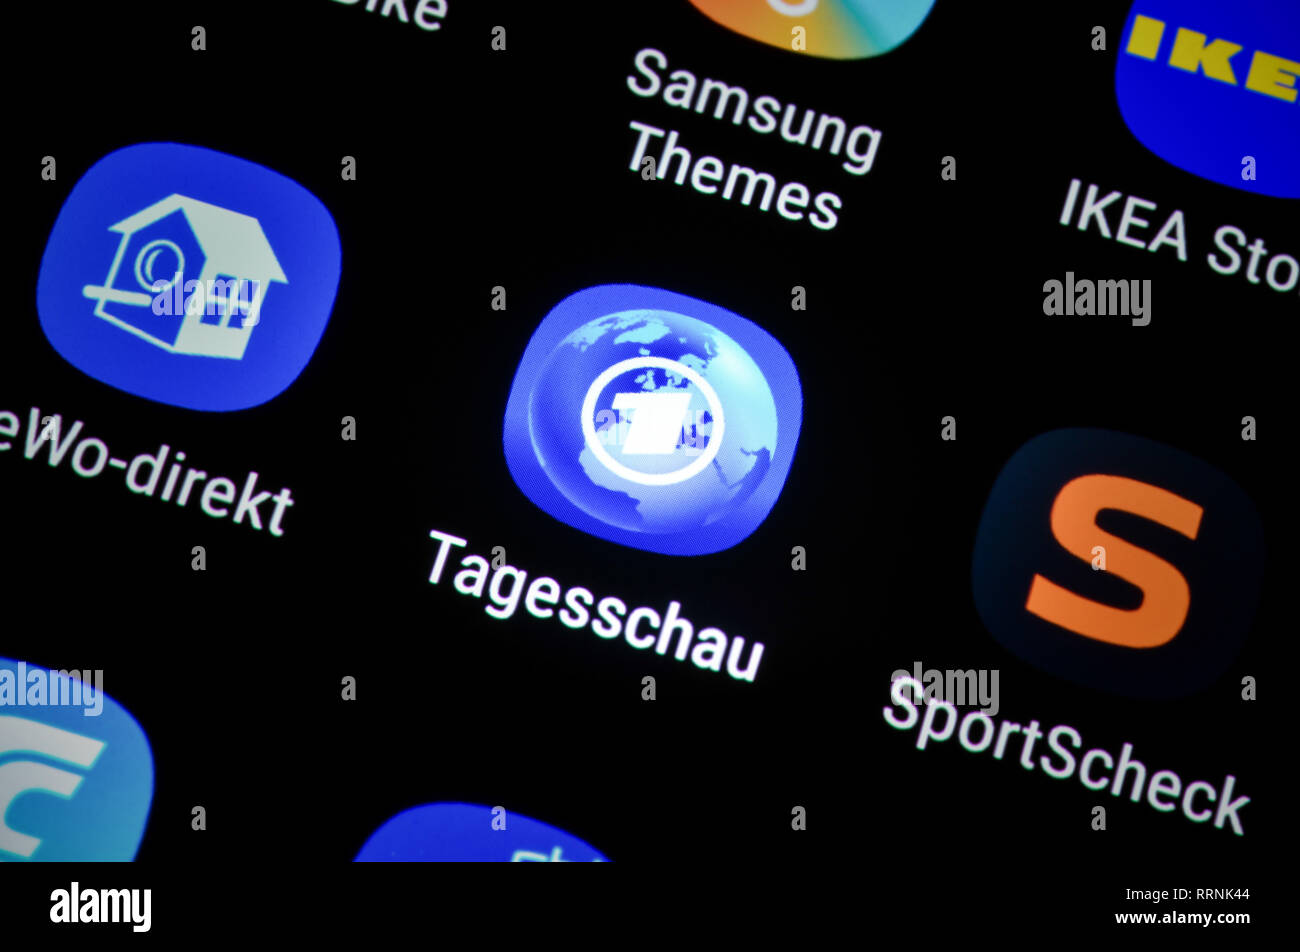 Smartphone, display, ext., day show, Display, App, Tagesschau Stock Photo